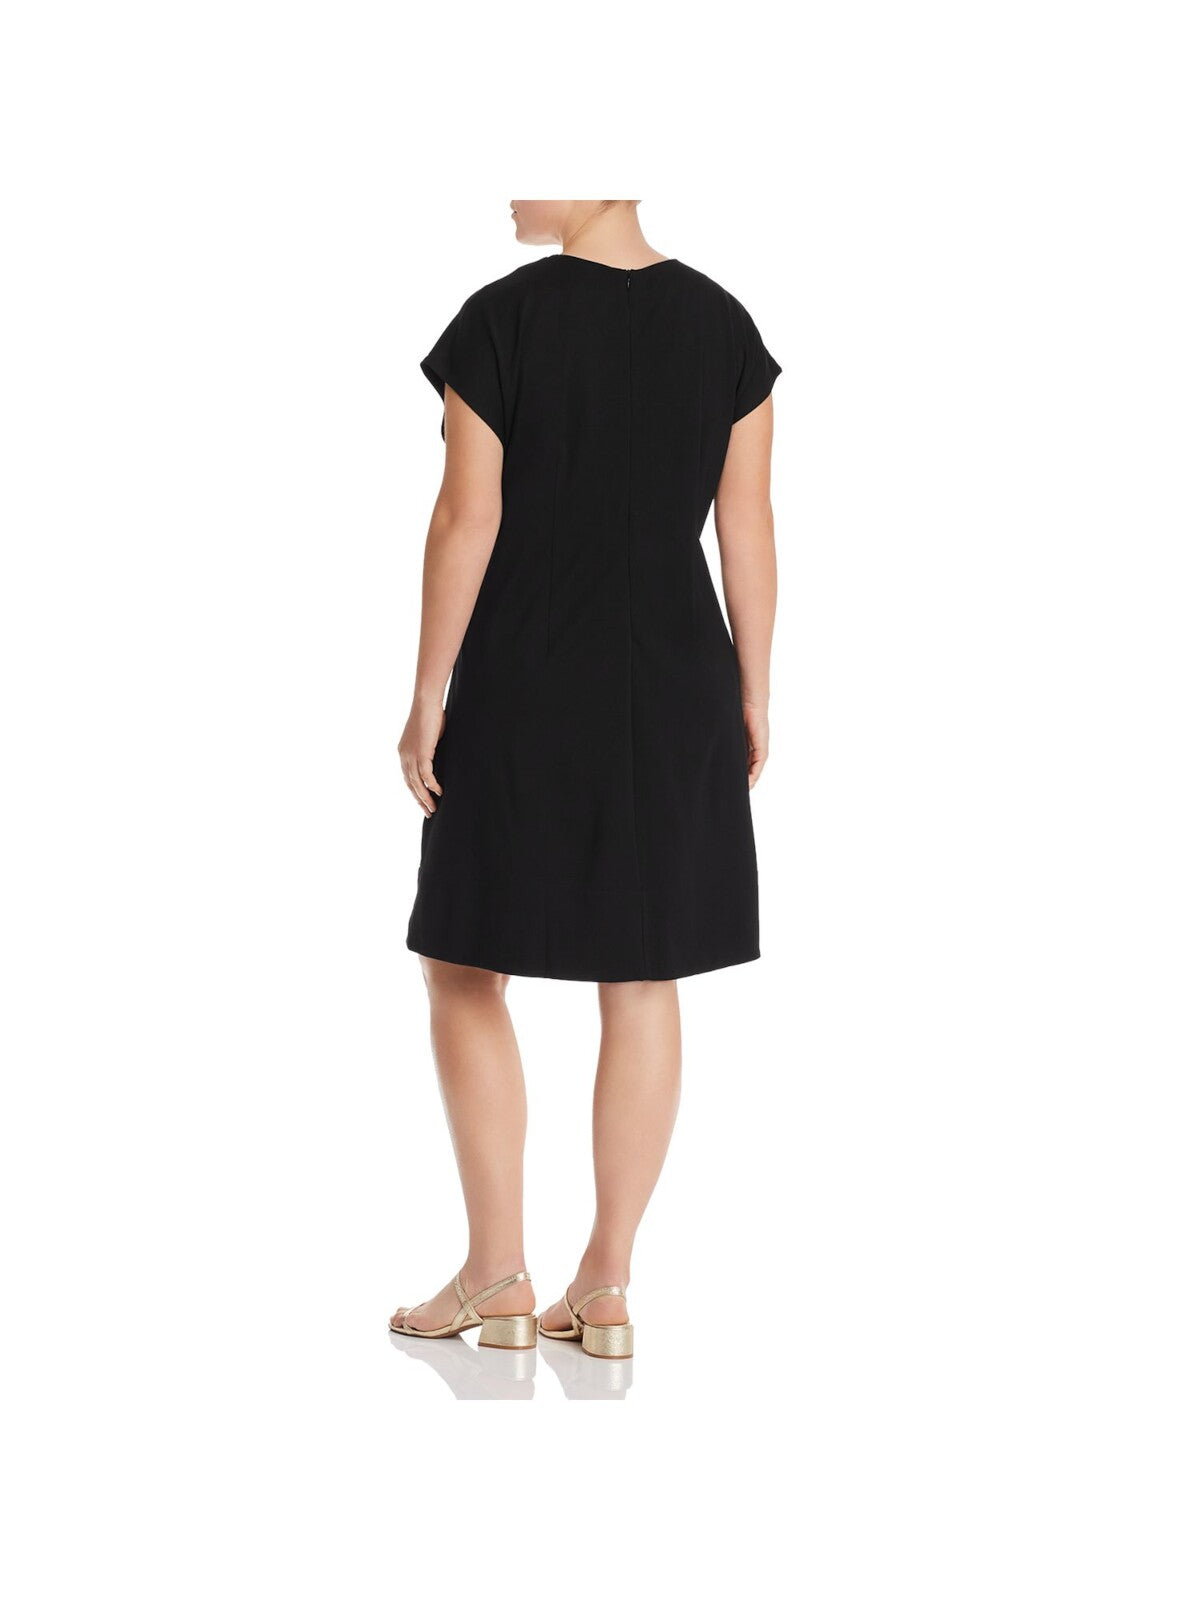 LYSSE Womens Black Stretch Zippered Darted Lace Up V-neck Cap Sleeve Knee Length Shift Dress Plus 3X